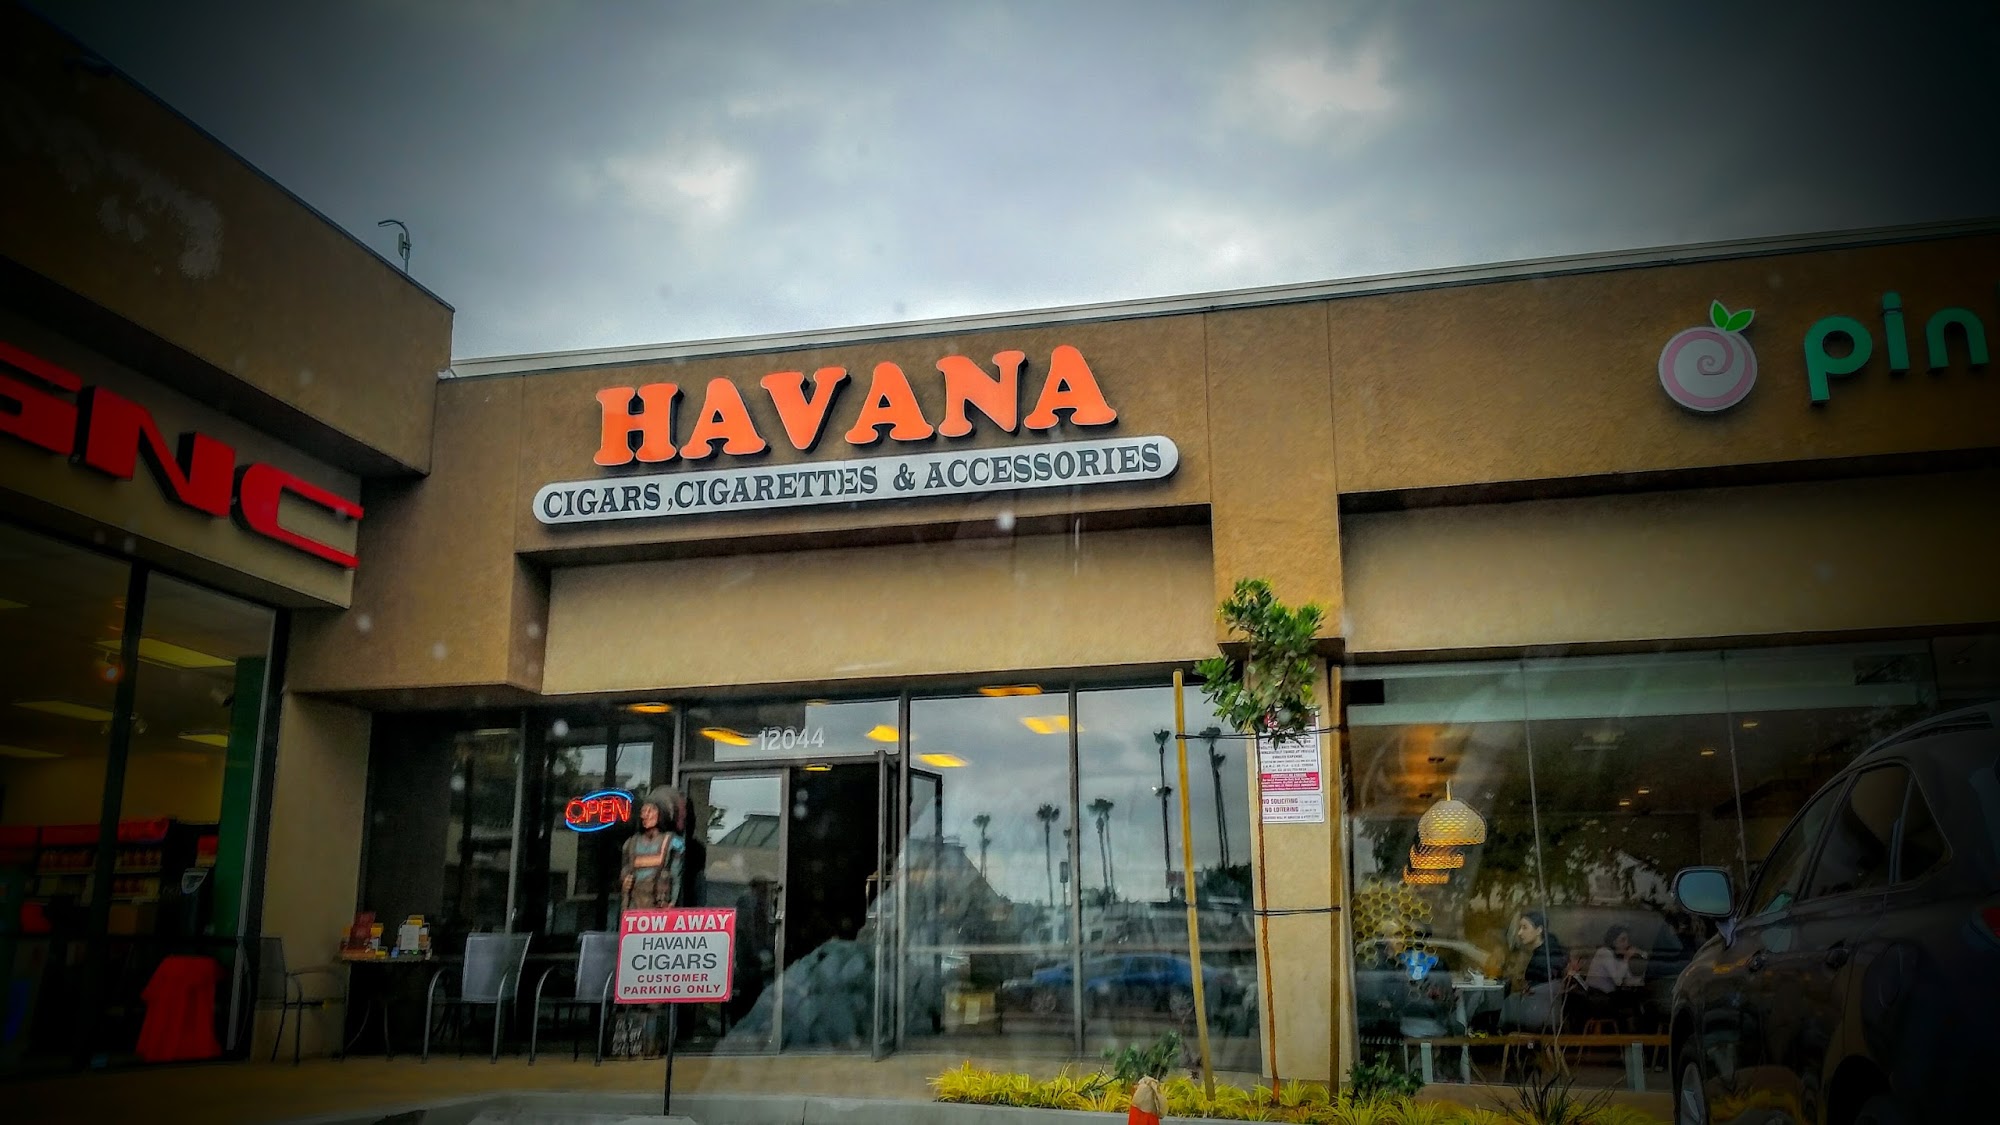 Havana Cigars